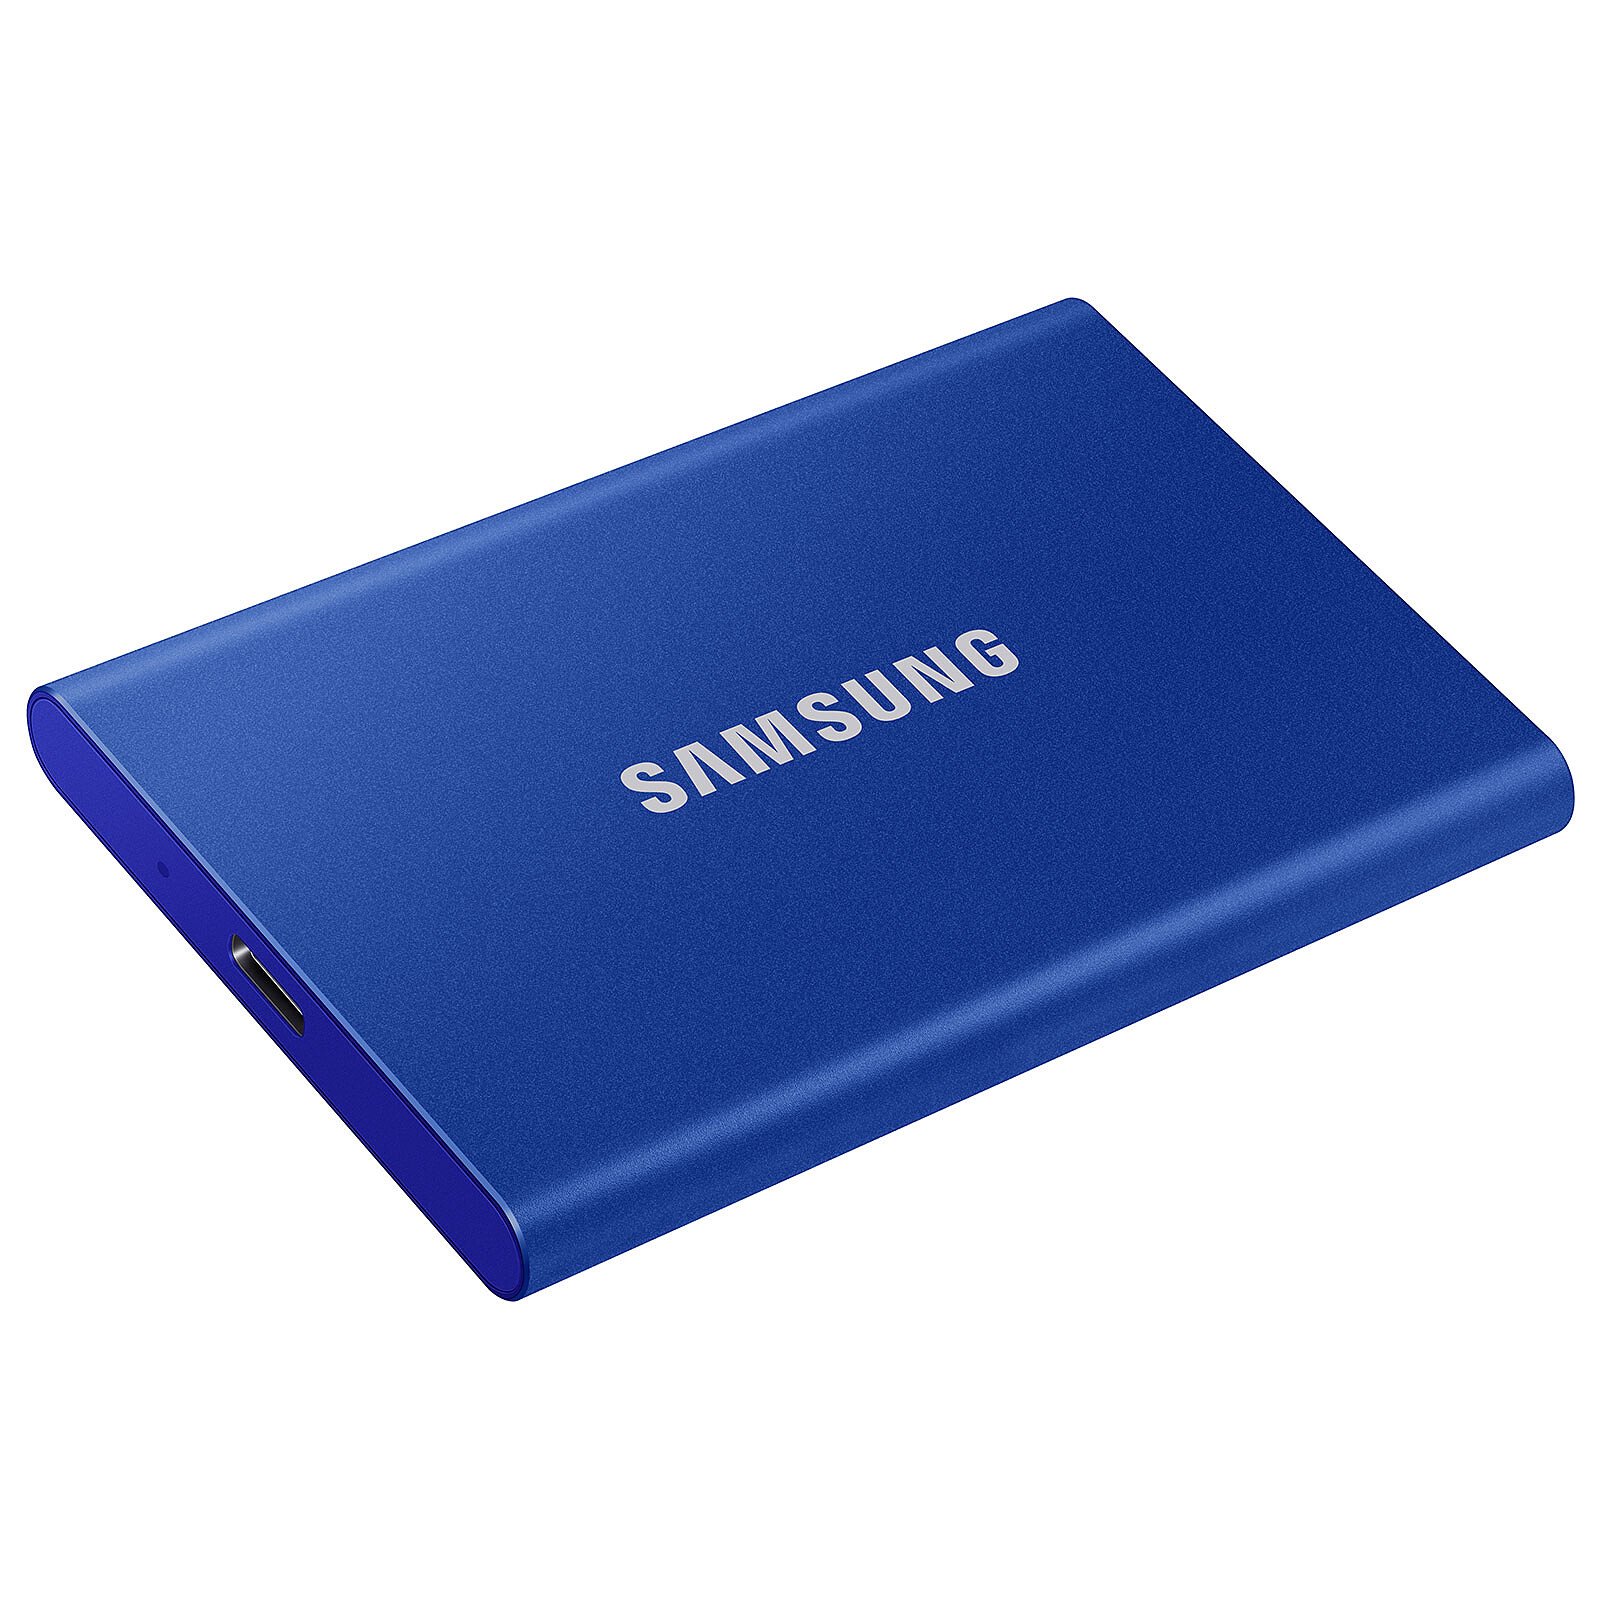 Samsung Portable SSD T7 Touch Drive Review - Legit Reviews